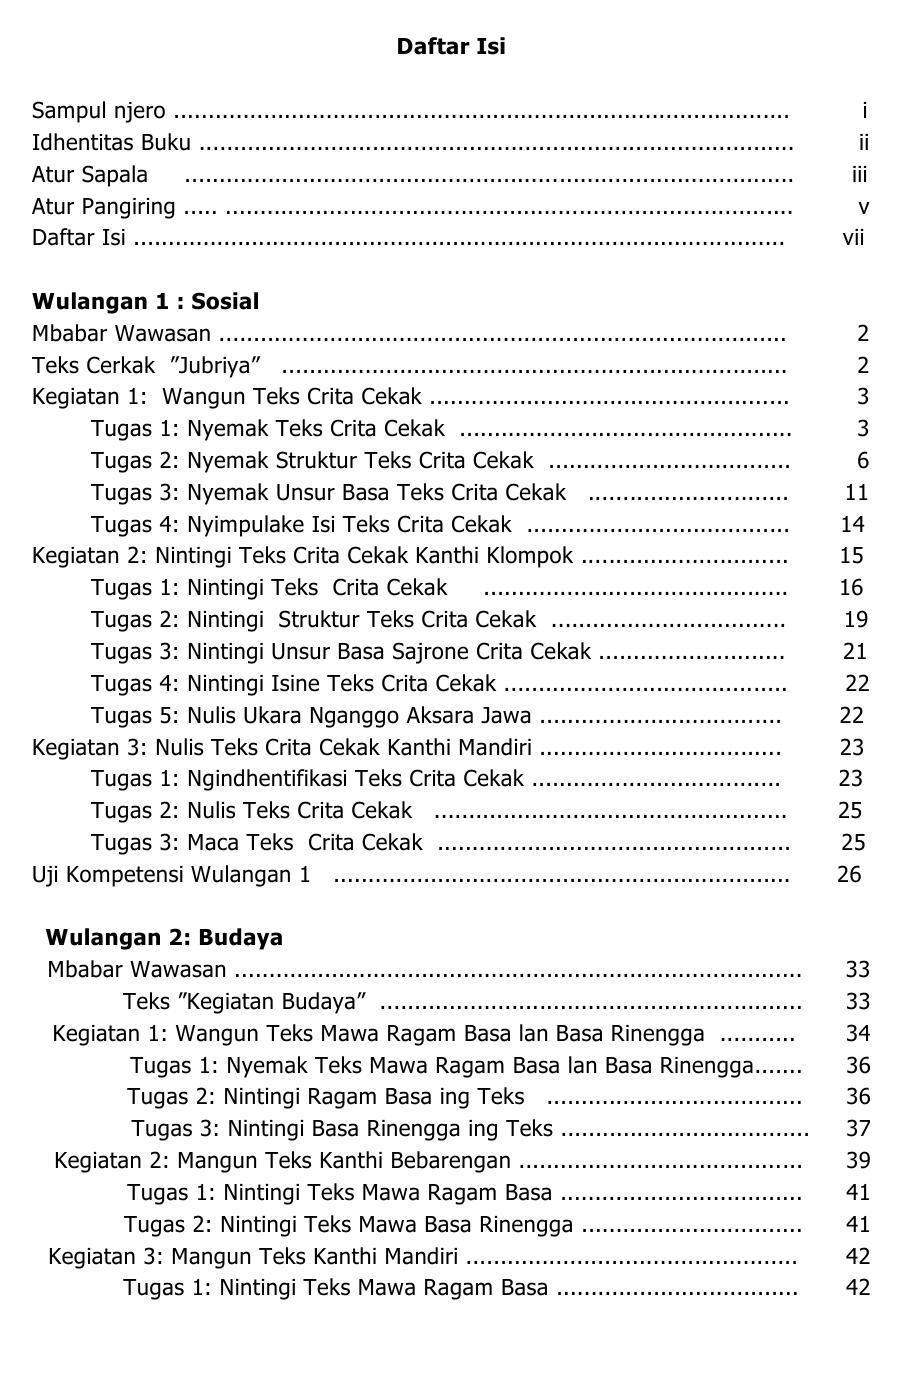 Buku Siswa Kelas 8 Bahasa Jawa Kirtya Basa 2015 For Android Apk Download